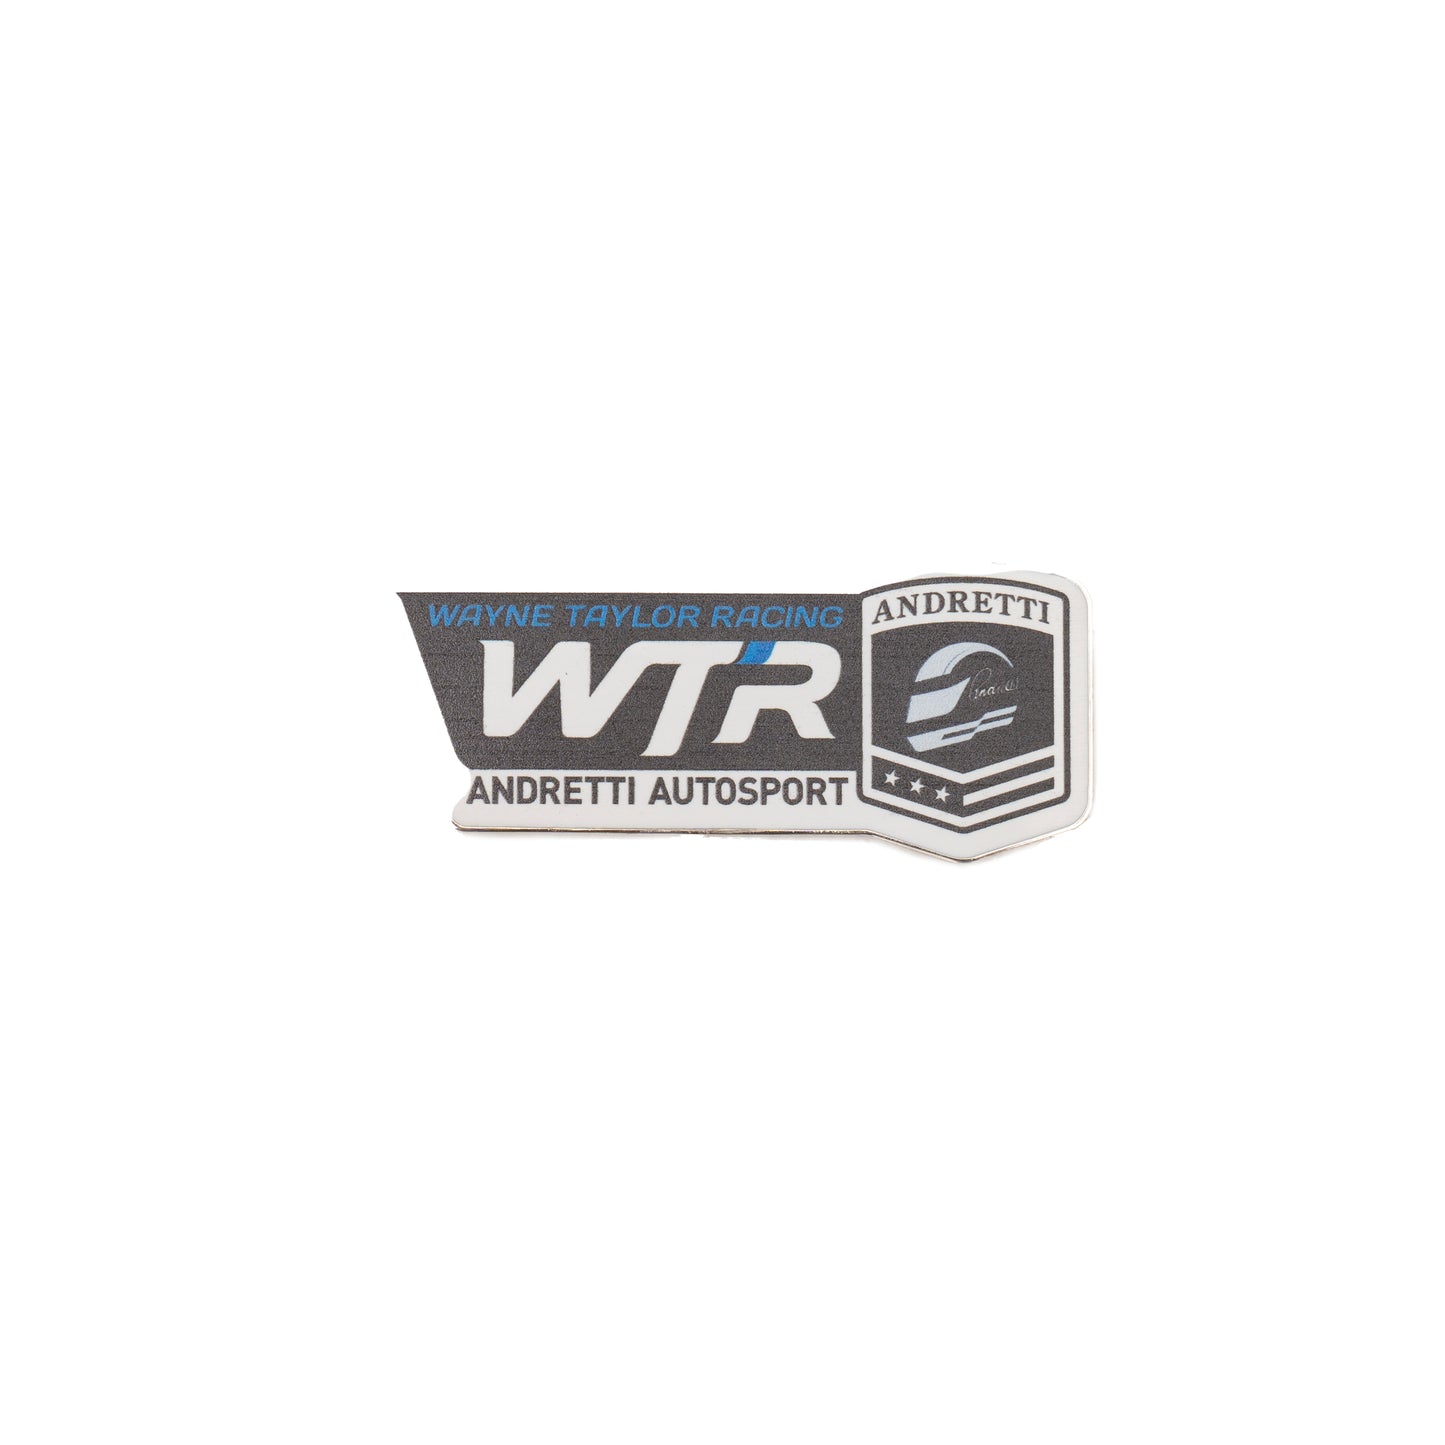 WTR Andretti Autosport Lapel Pin